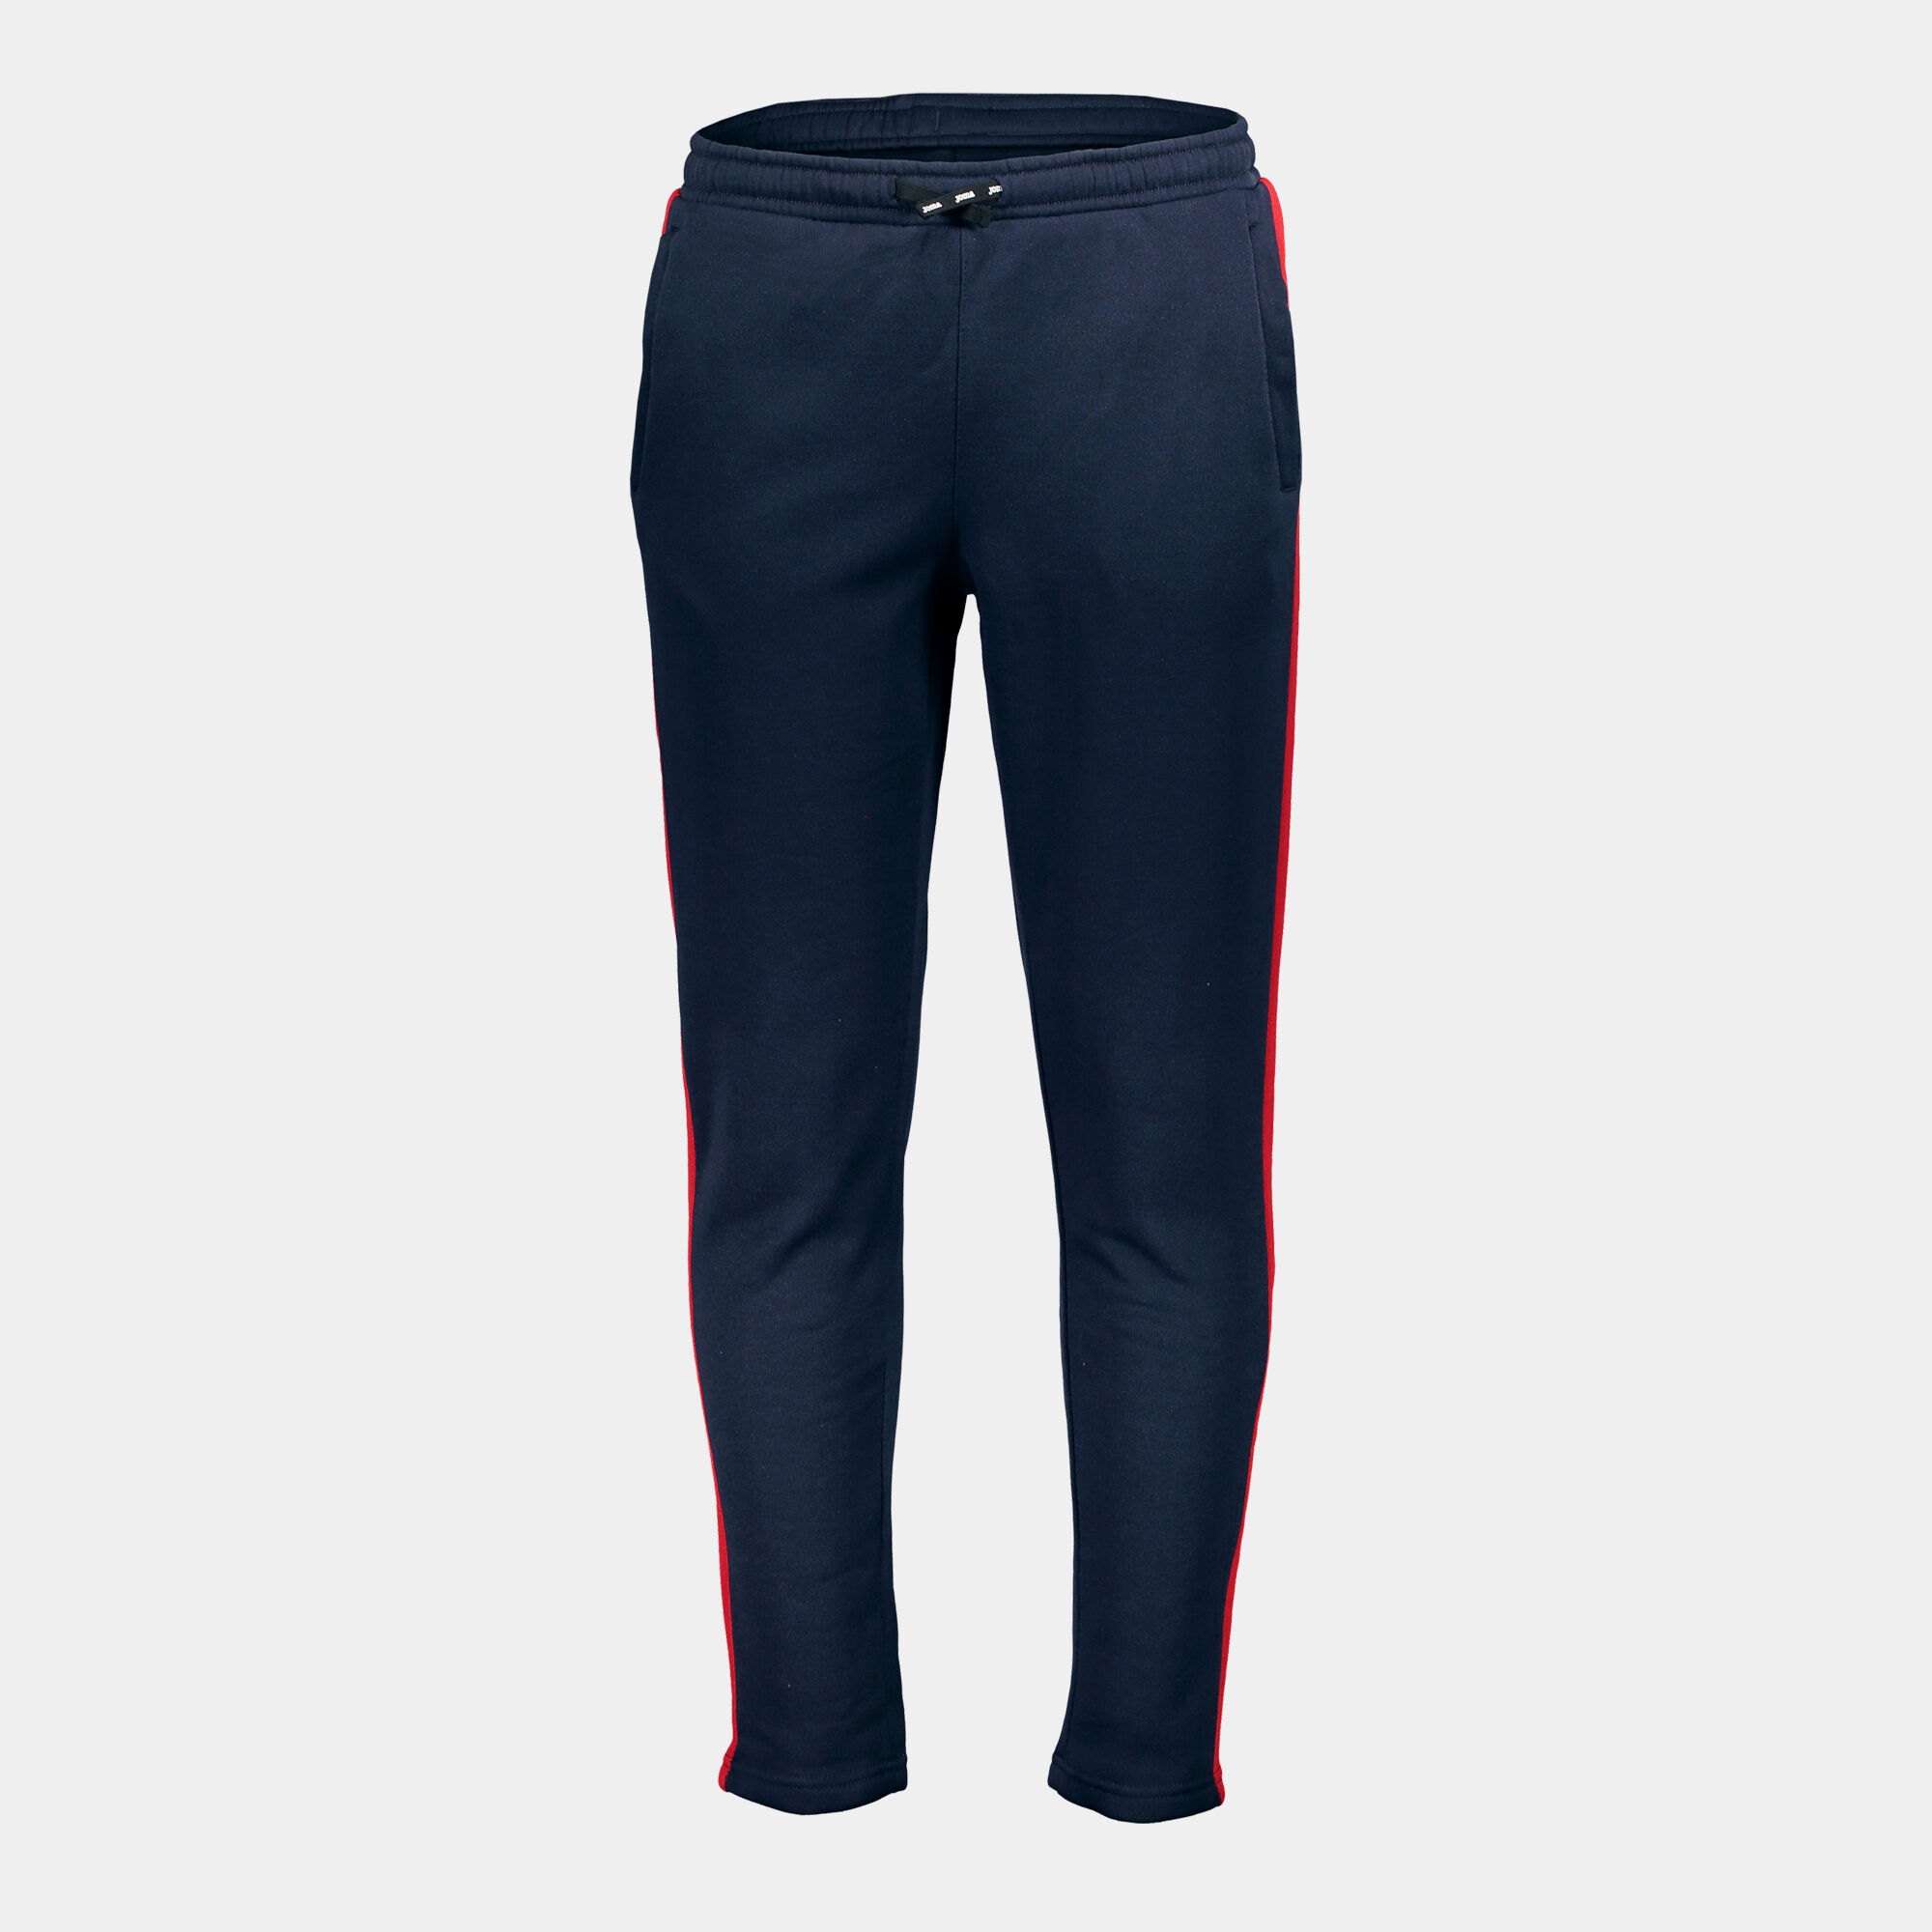 Longs pants man Stripe navy blue red | JOMA®